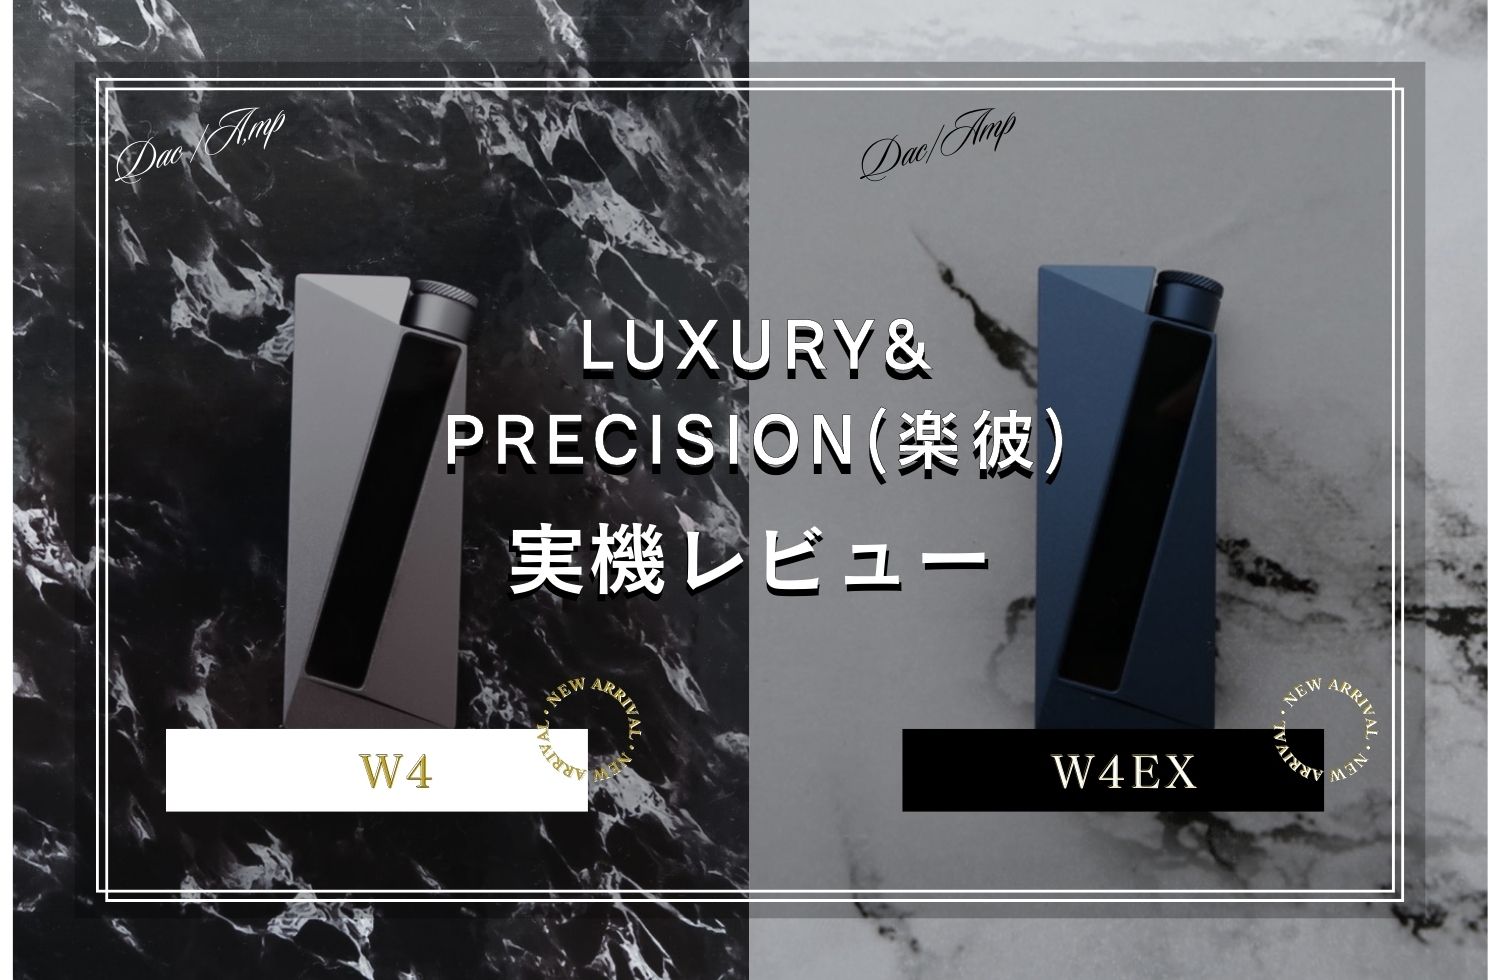 [PR]LUXURY&PRECISION(楽彼) W4 / W4EX 実機レビュー